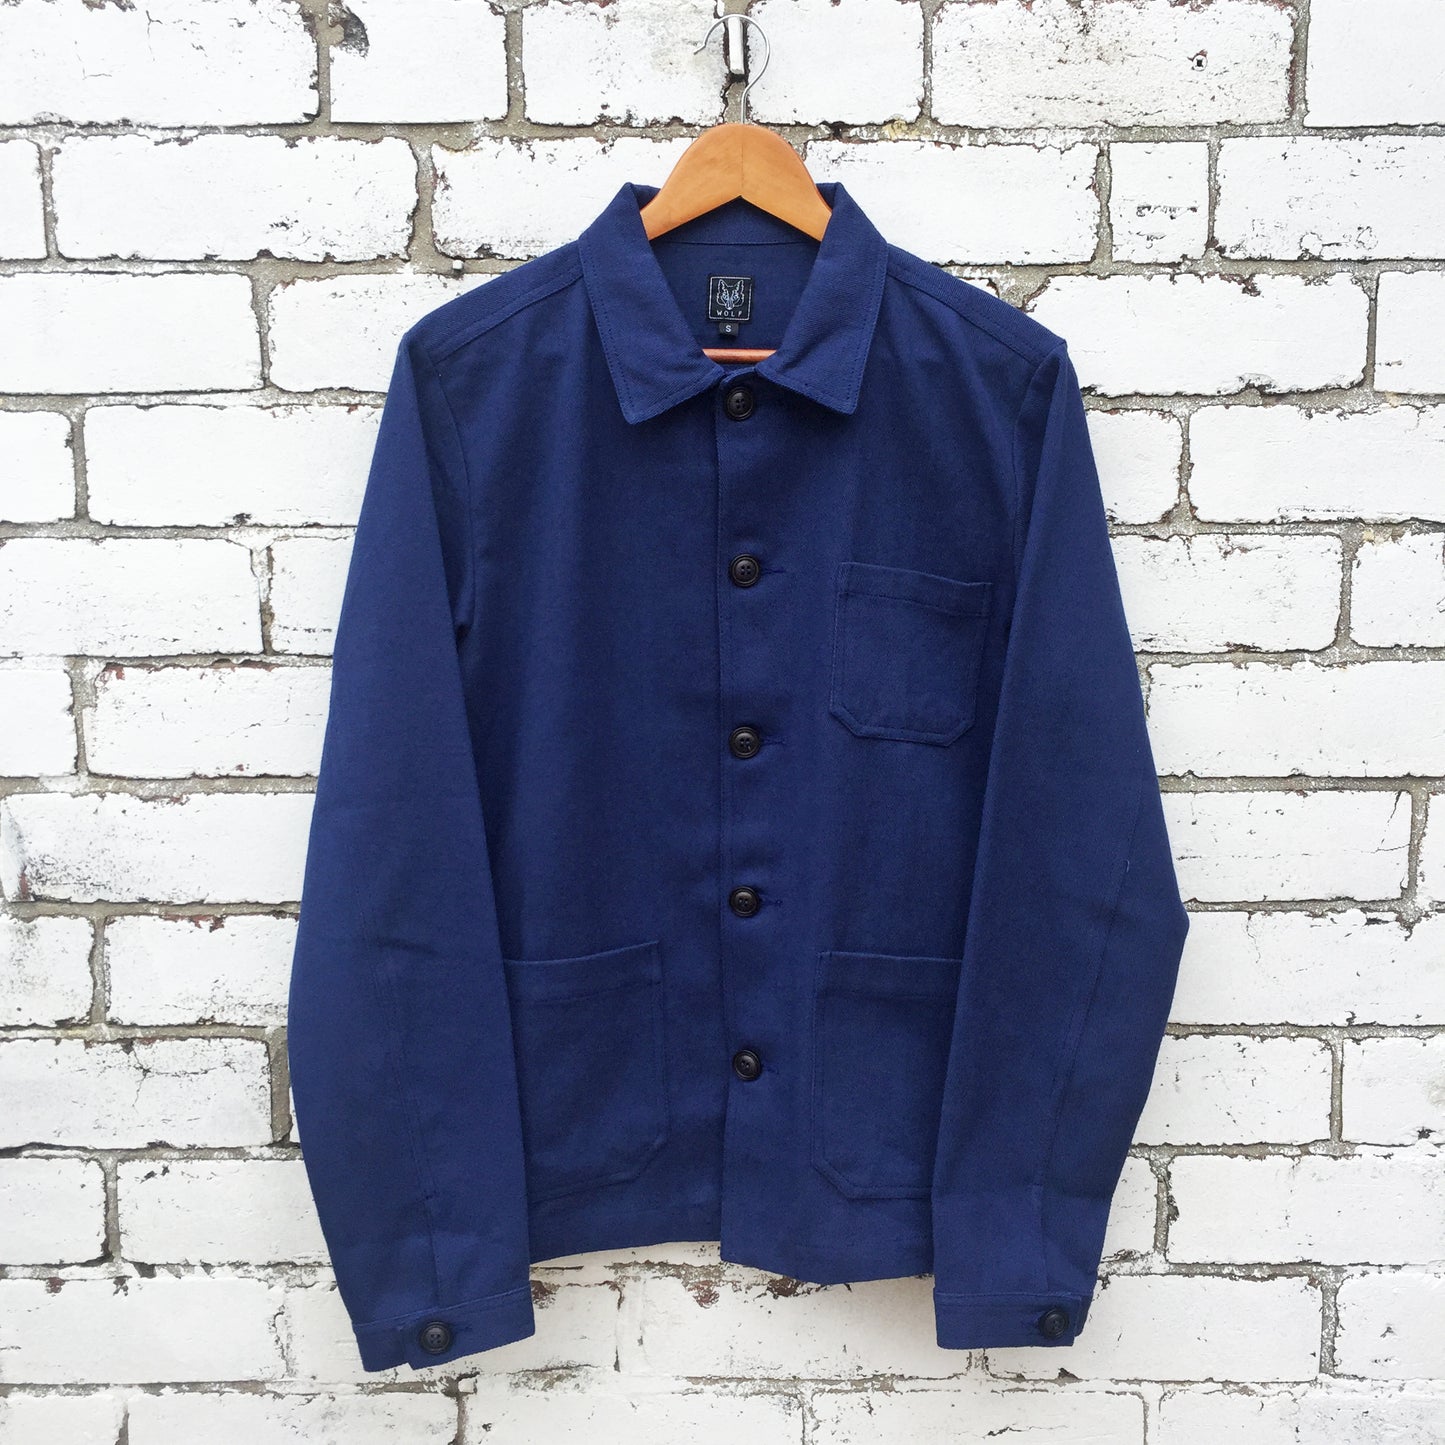 French Cotton Twill Chore Jacket Navy Blue